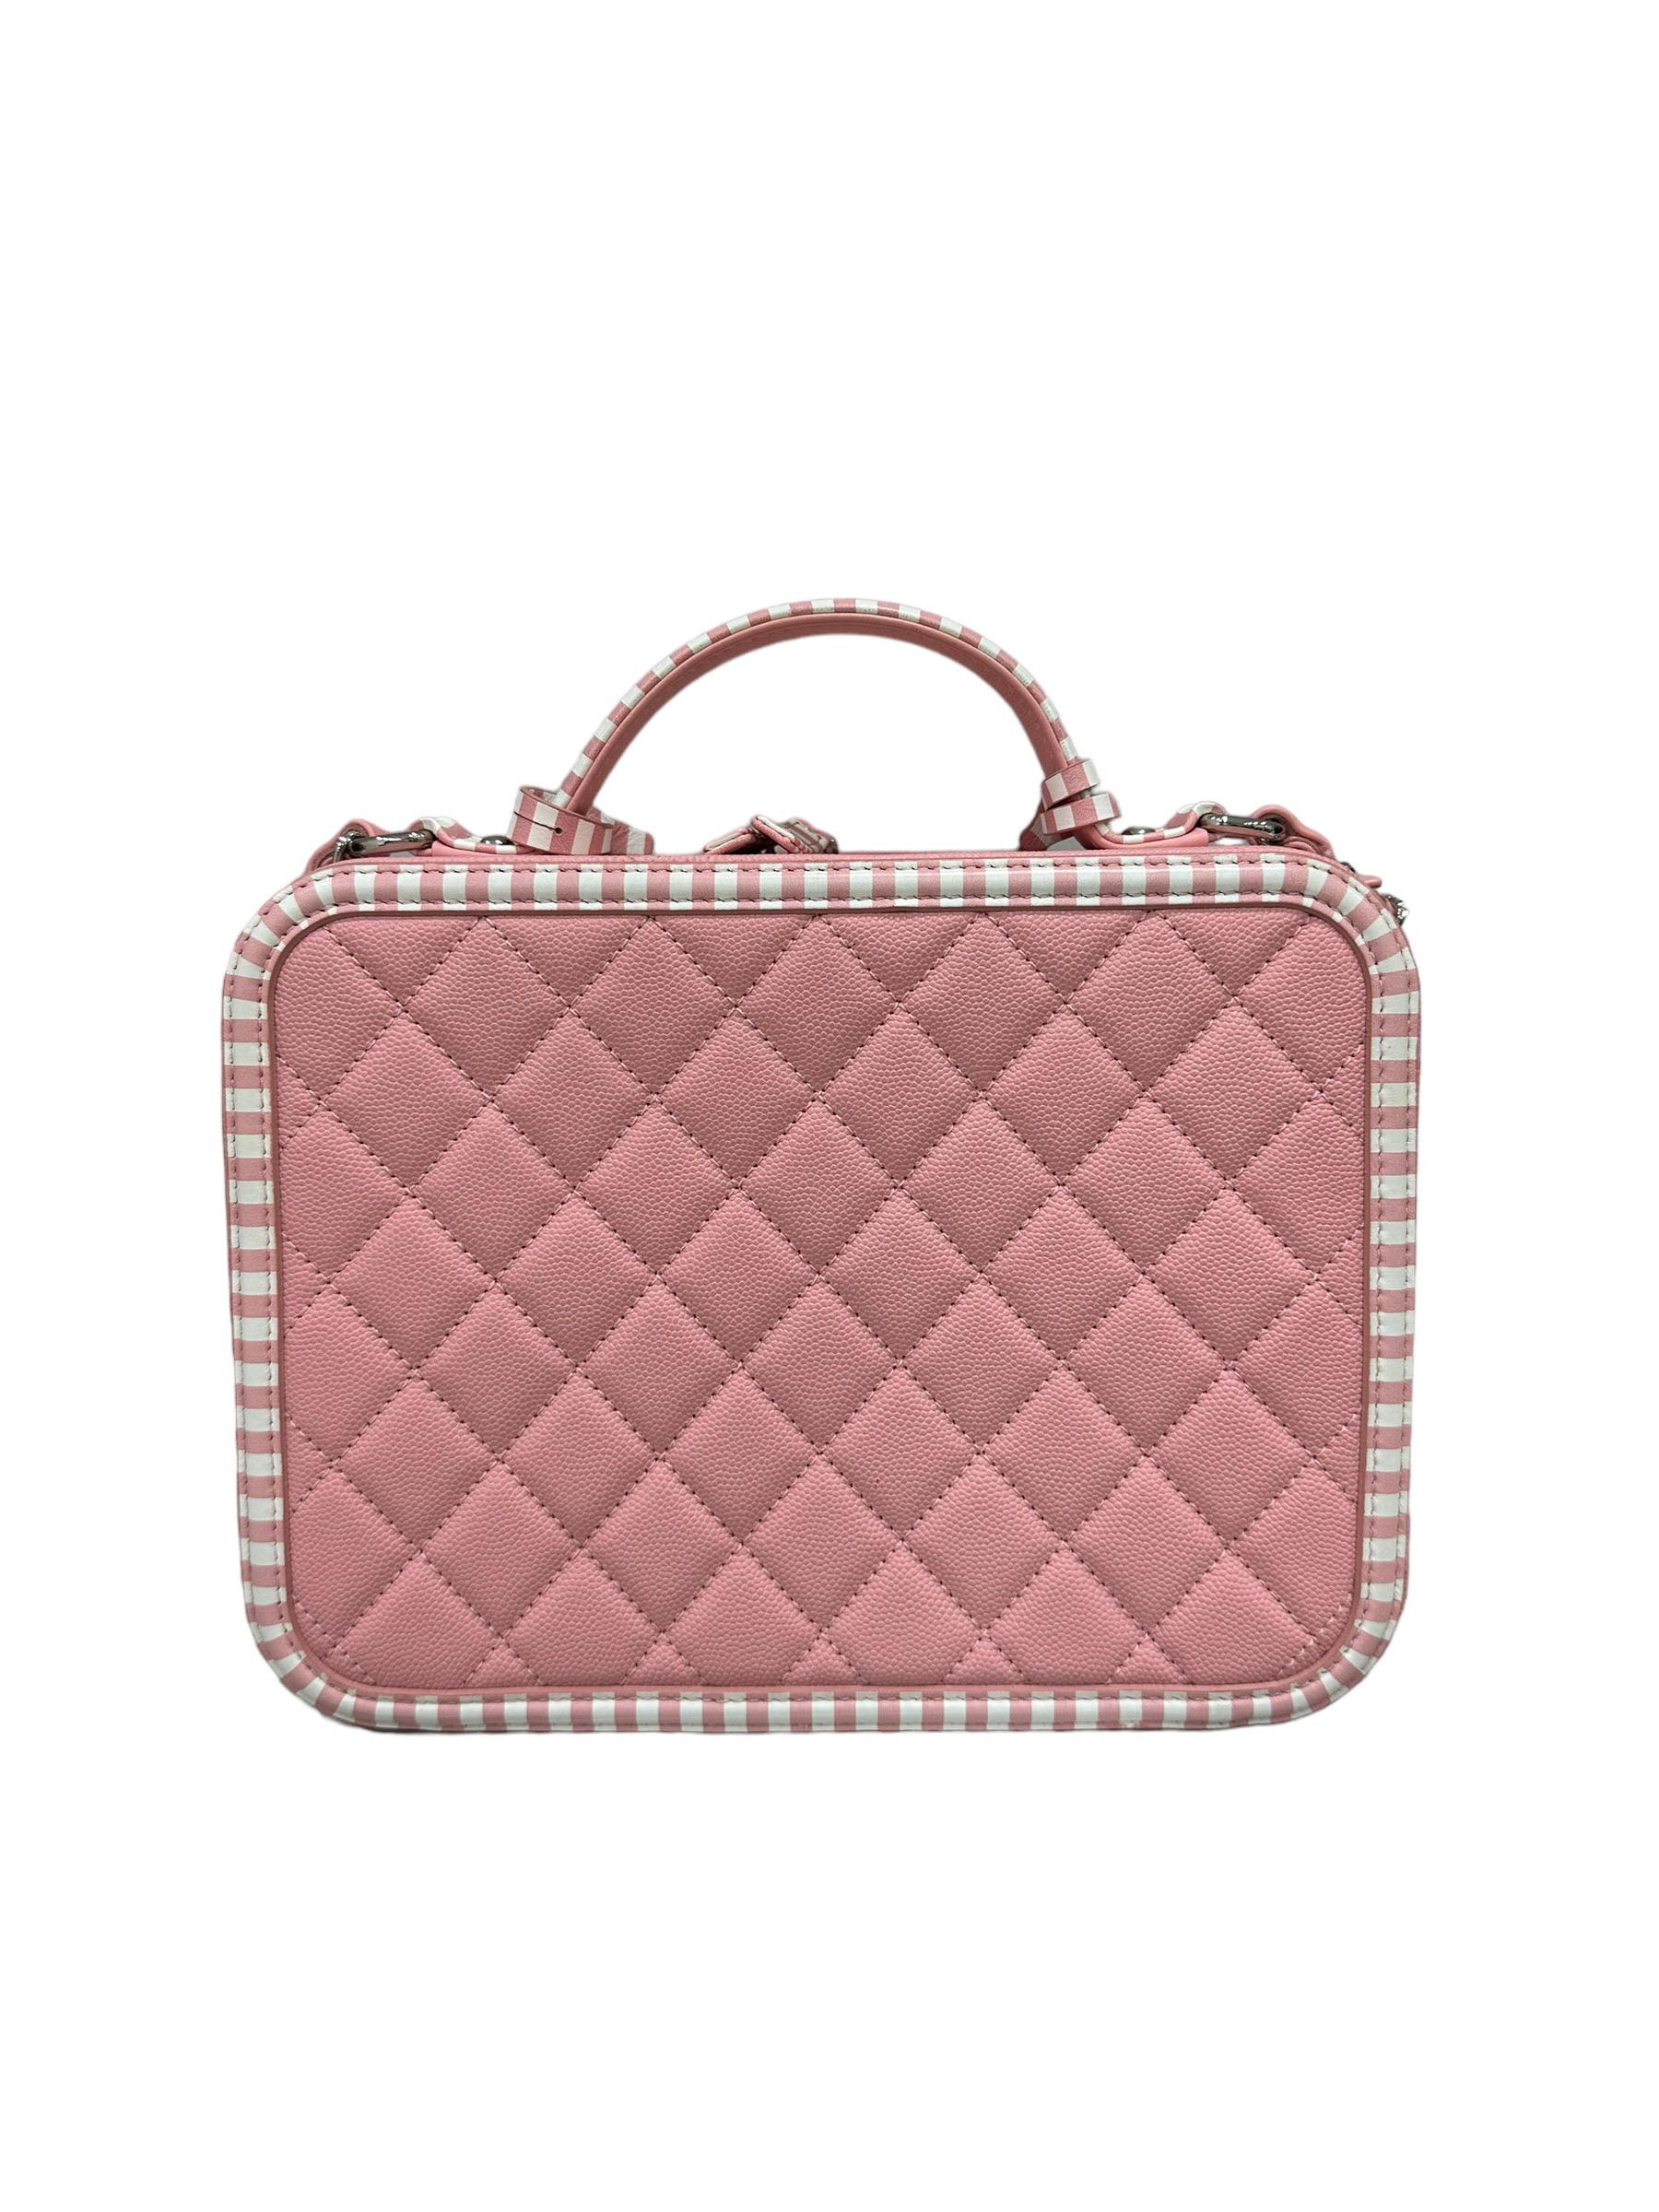 Beauty Case Chanel Vanity Rosa 2019 4